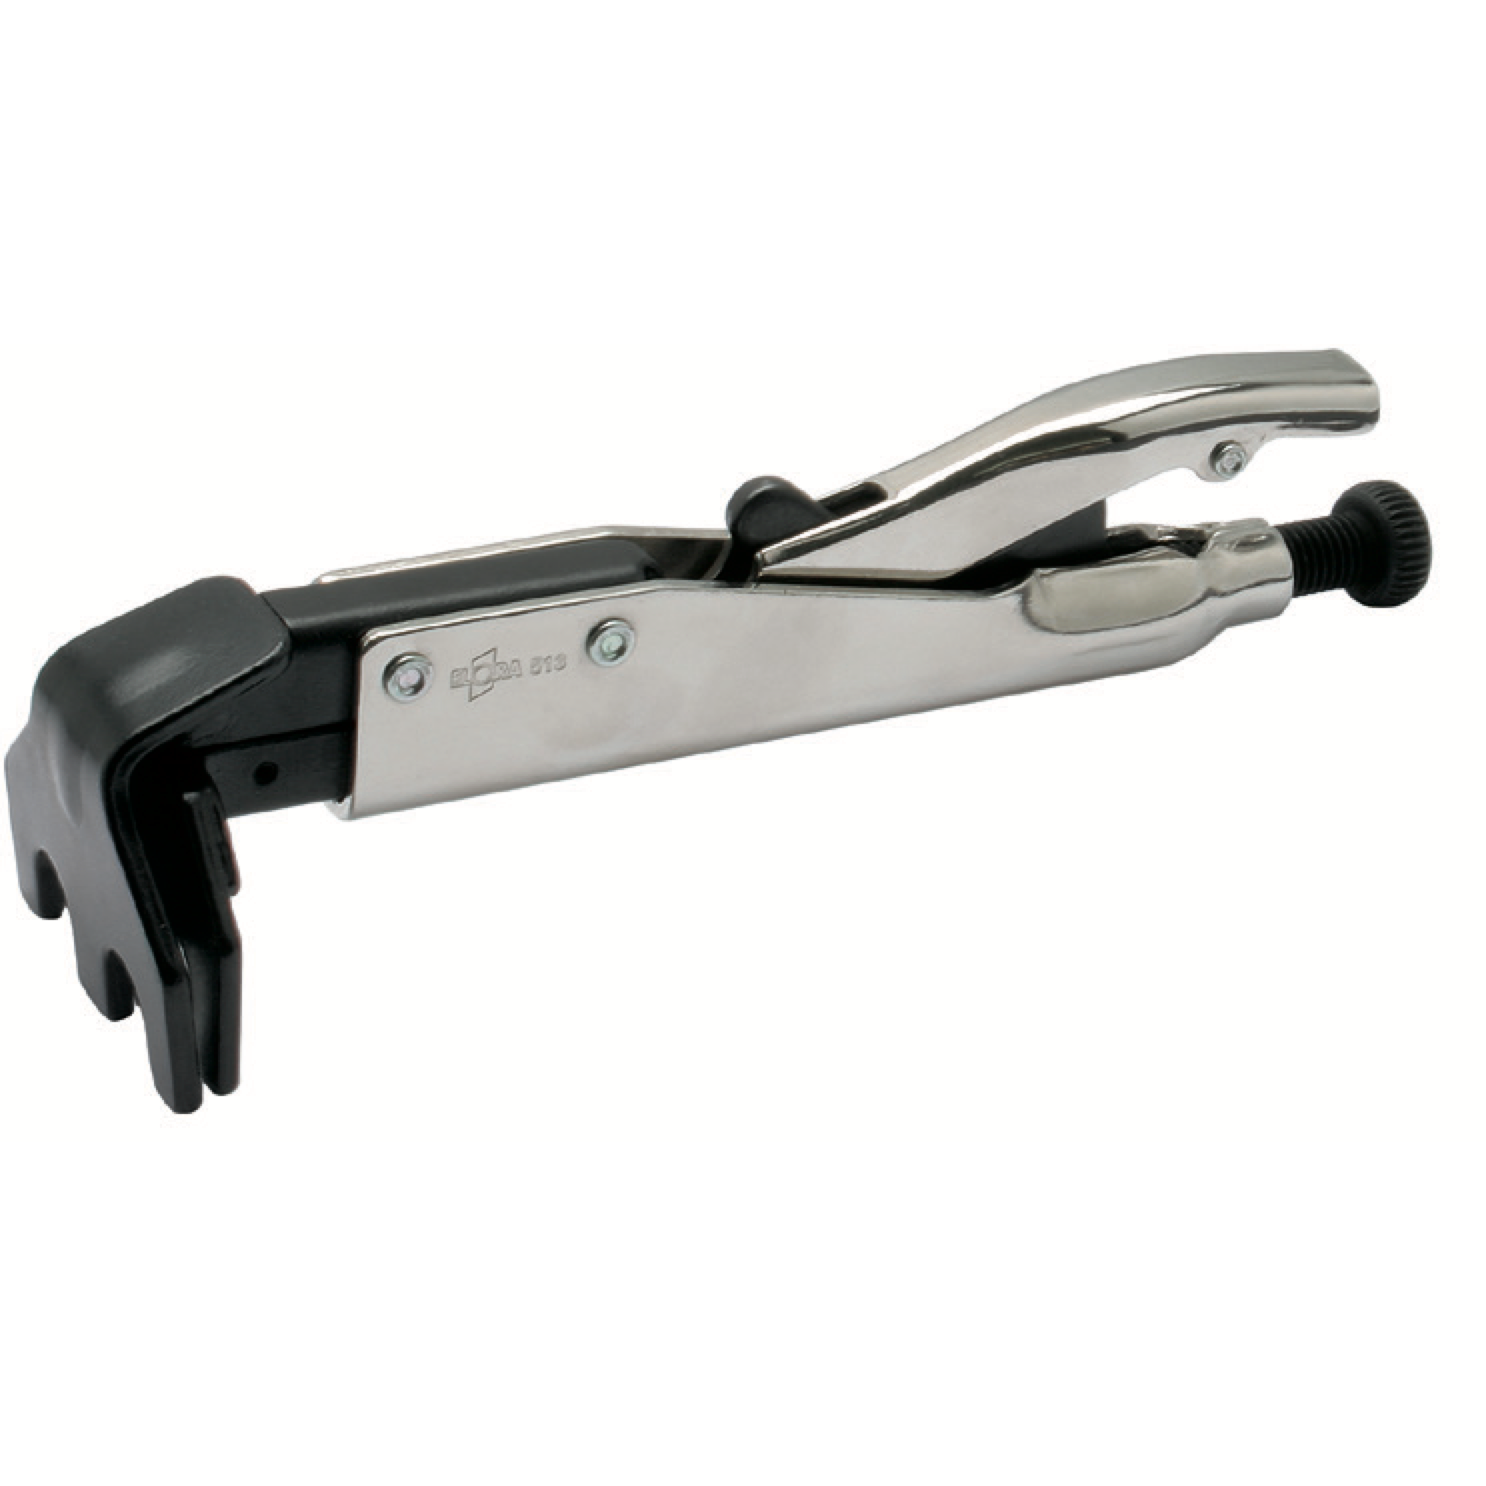 ELORA 513 Axial Grip Plier (ELORA Tools) - Premium Axial Grip Plier from ELORA - Shop now at Yew Aik.